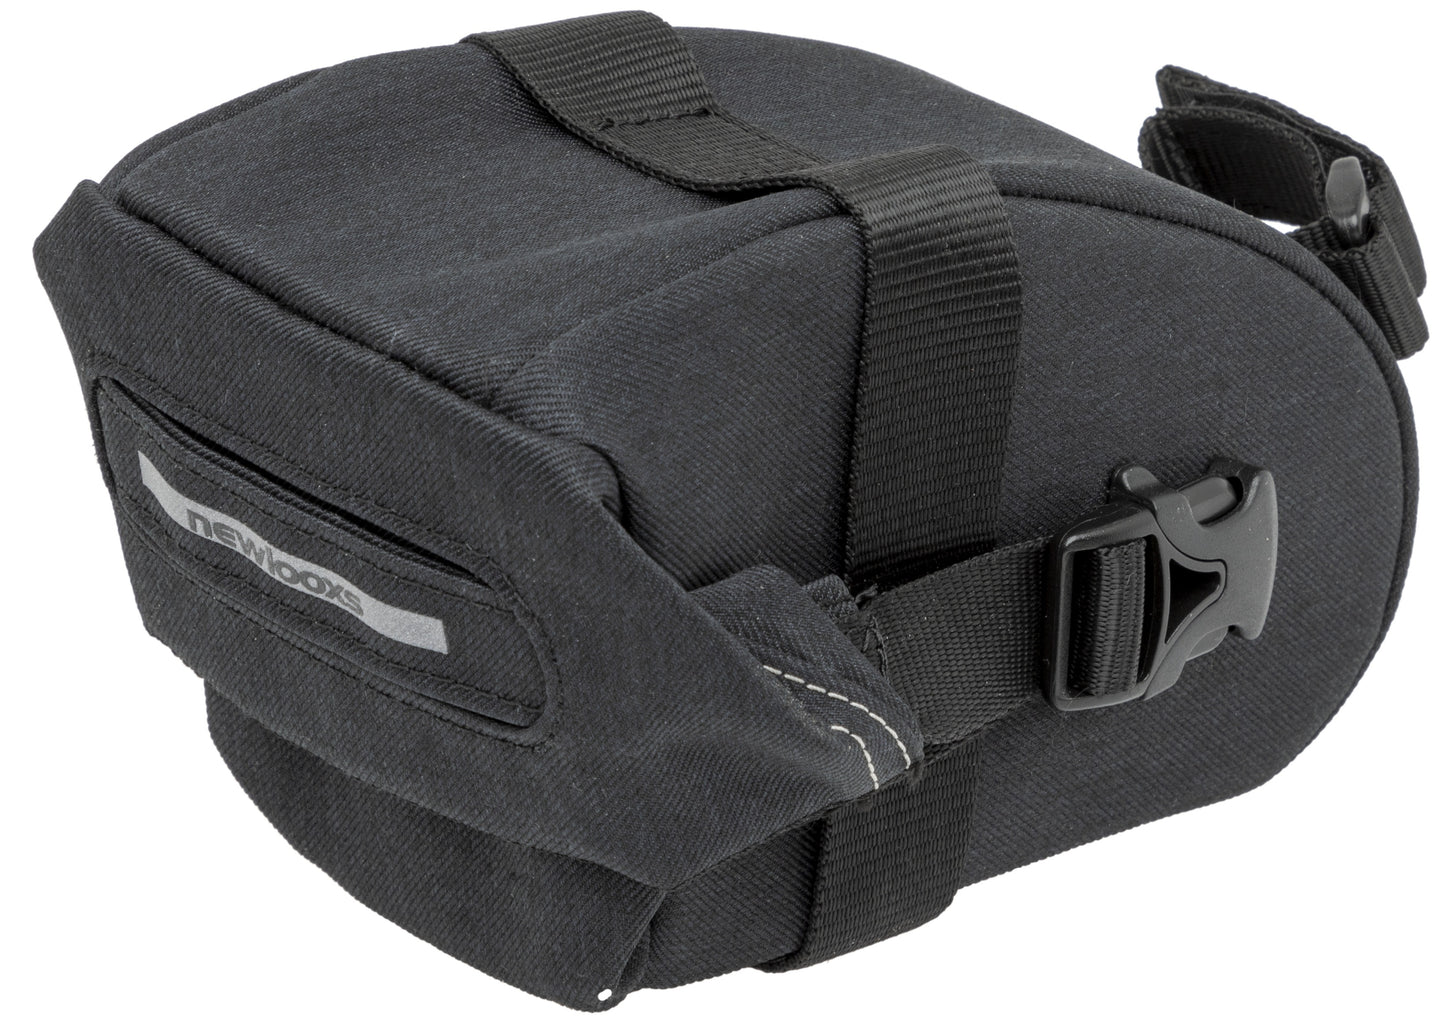 Nueva bolsa de silla de montar Sports Looxs - Negro - Poliéster - Velcro - 0.9L